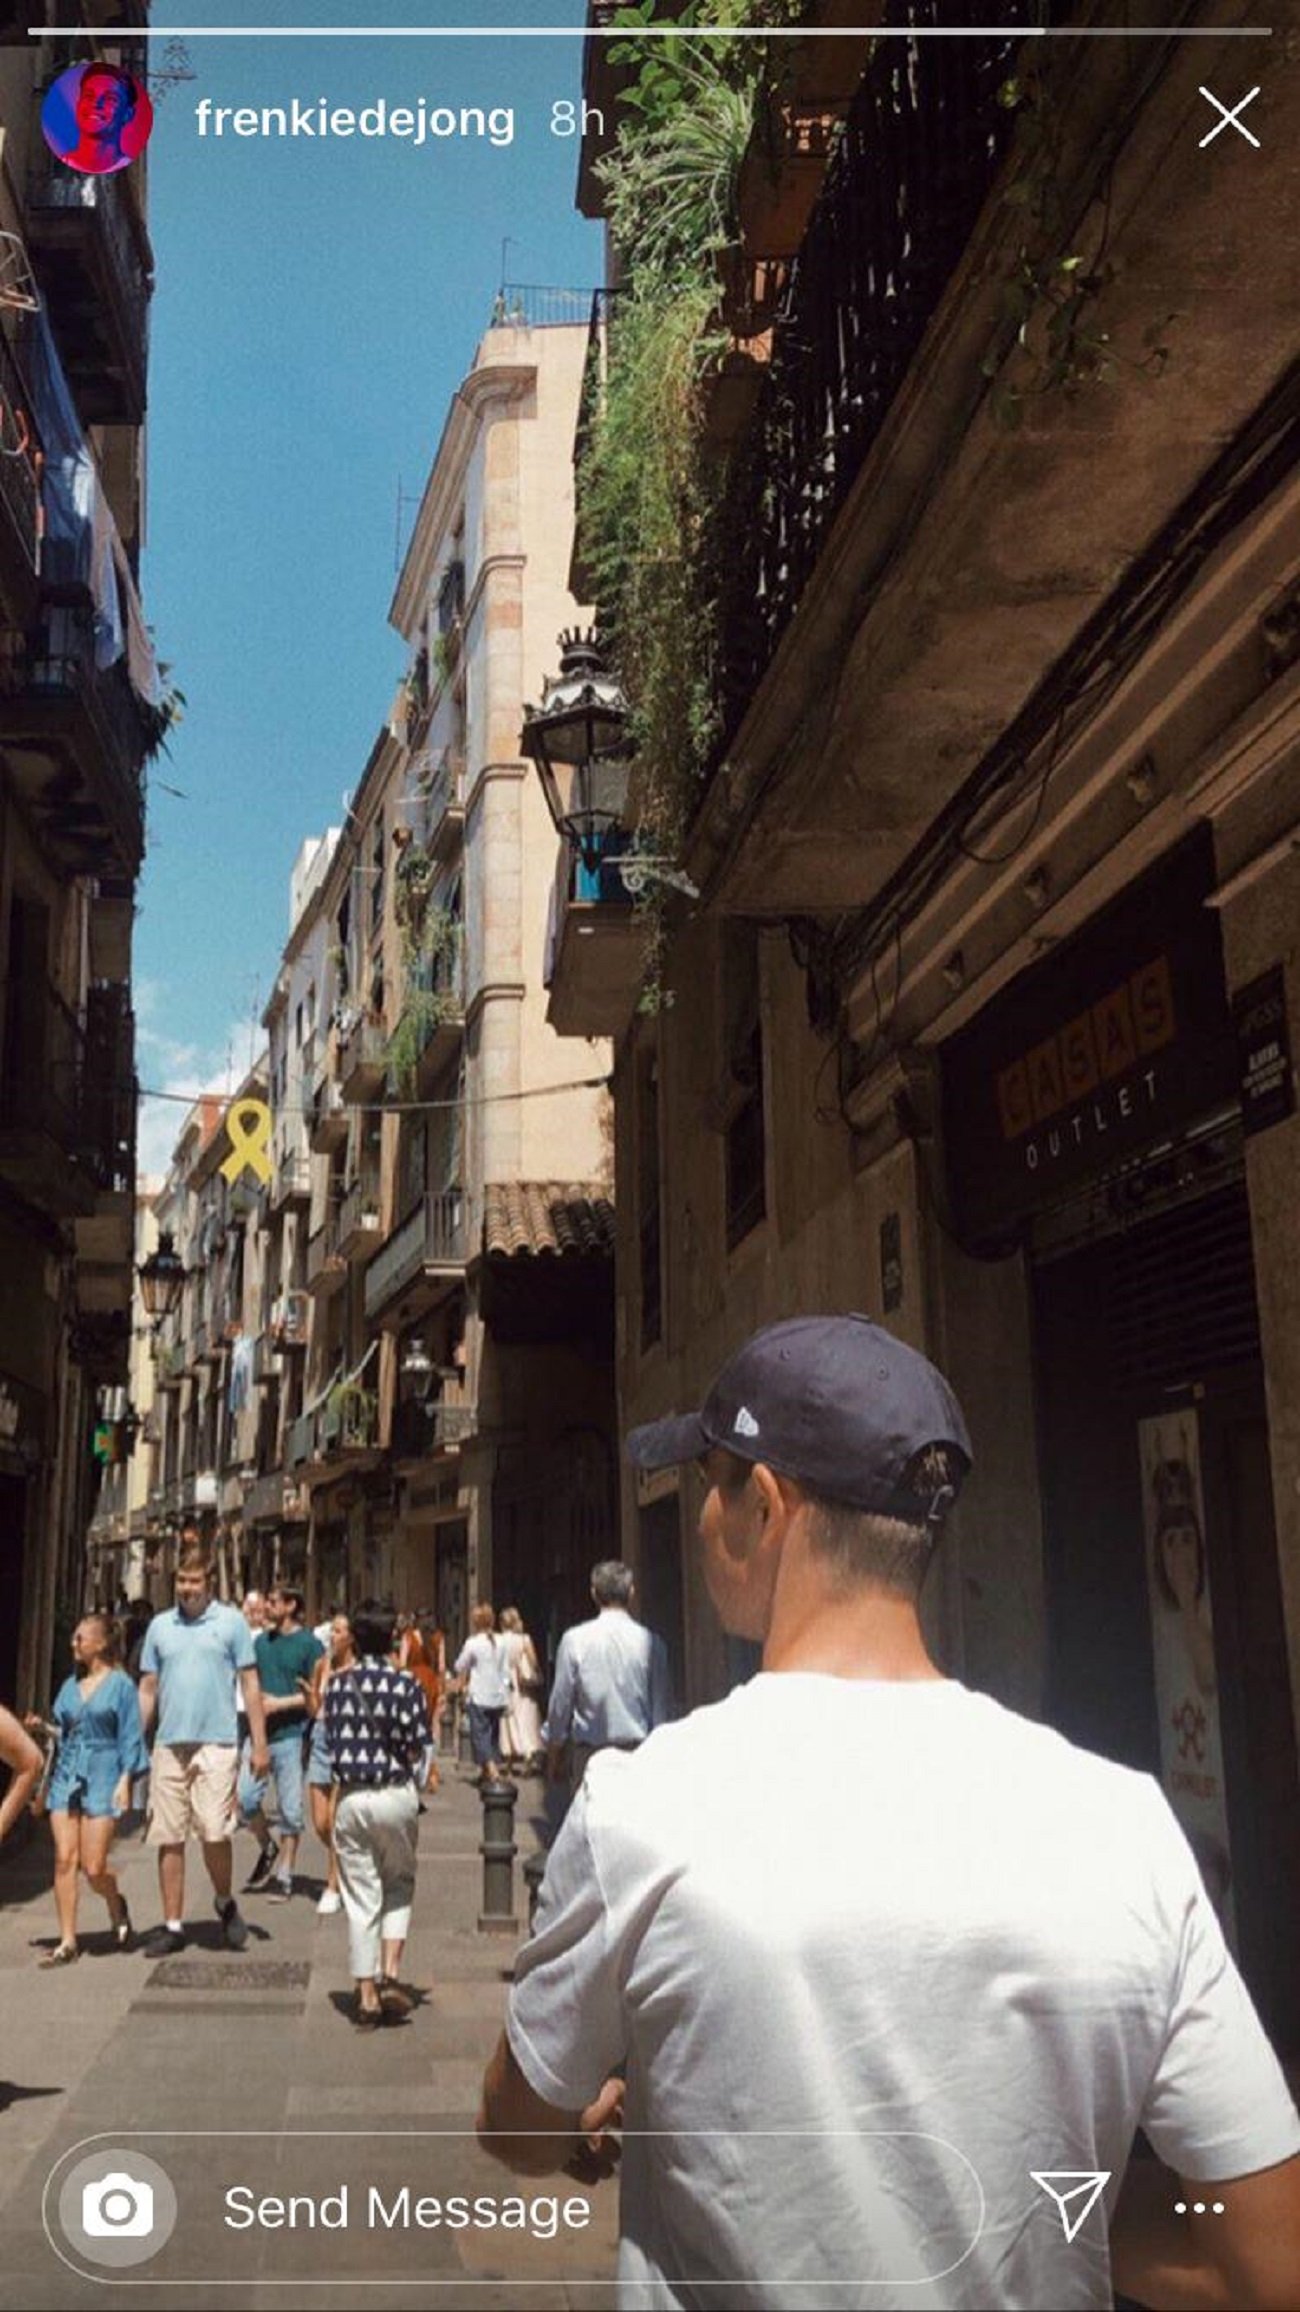 Frenkie de Jong llaç groc passeja Barcelona @frenkiedejong